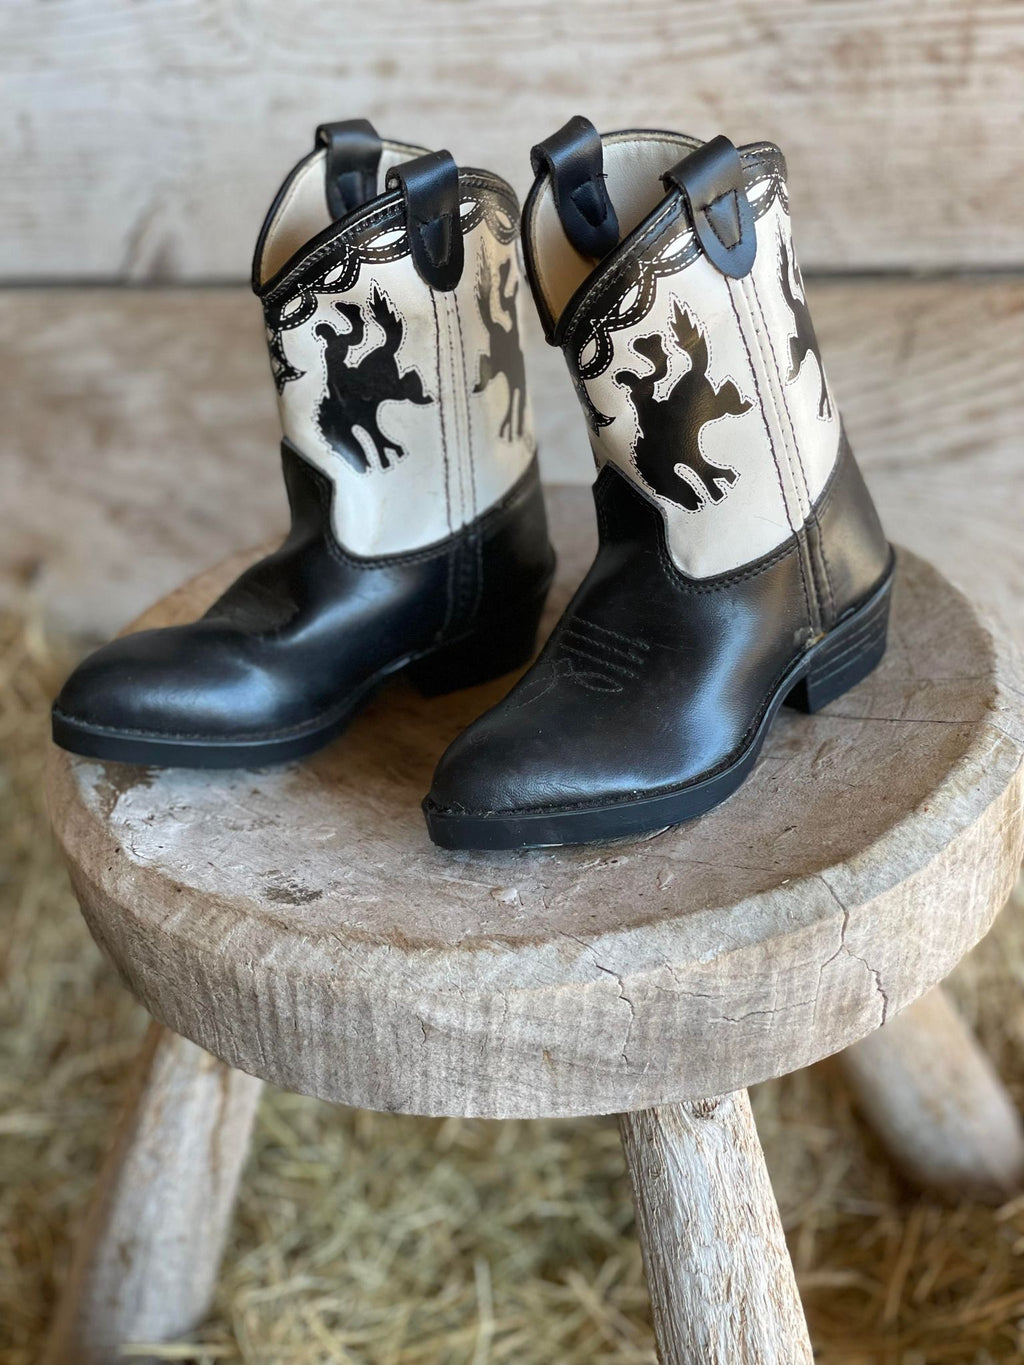 Vintage Bucking Horse Cowboy Boots (5.5 D)